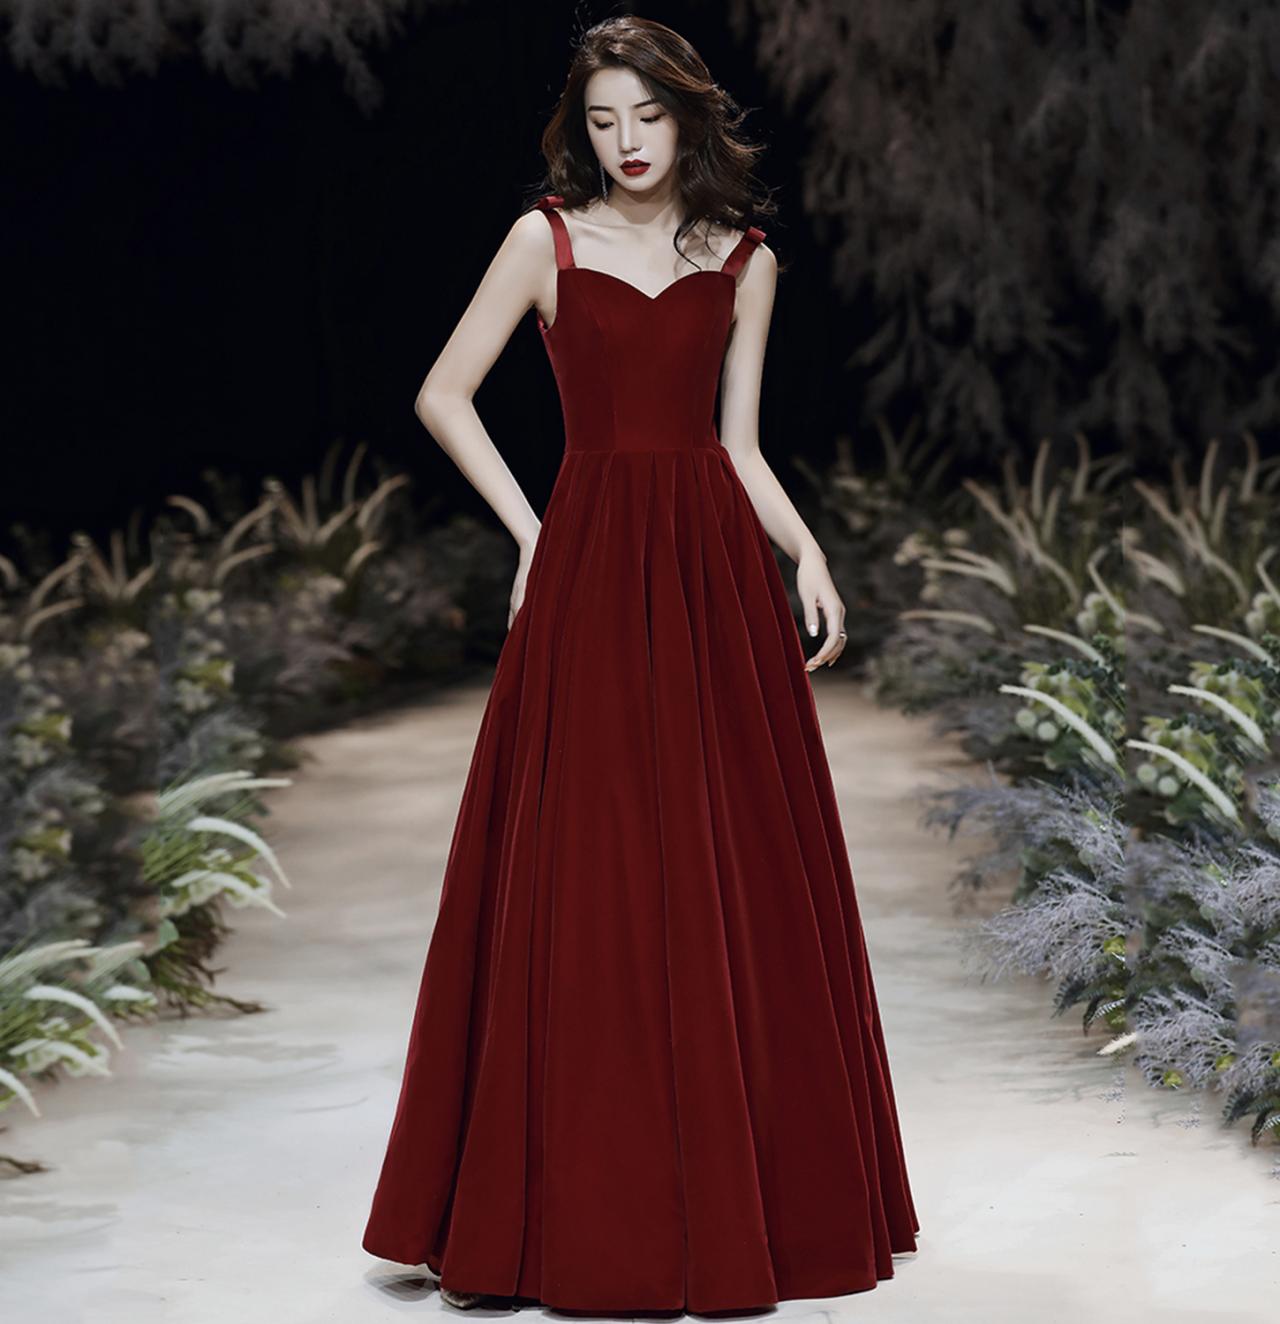 Red Velvet Long Prom Dress Simple Evening Gown